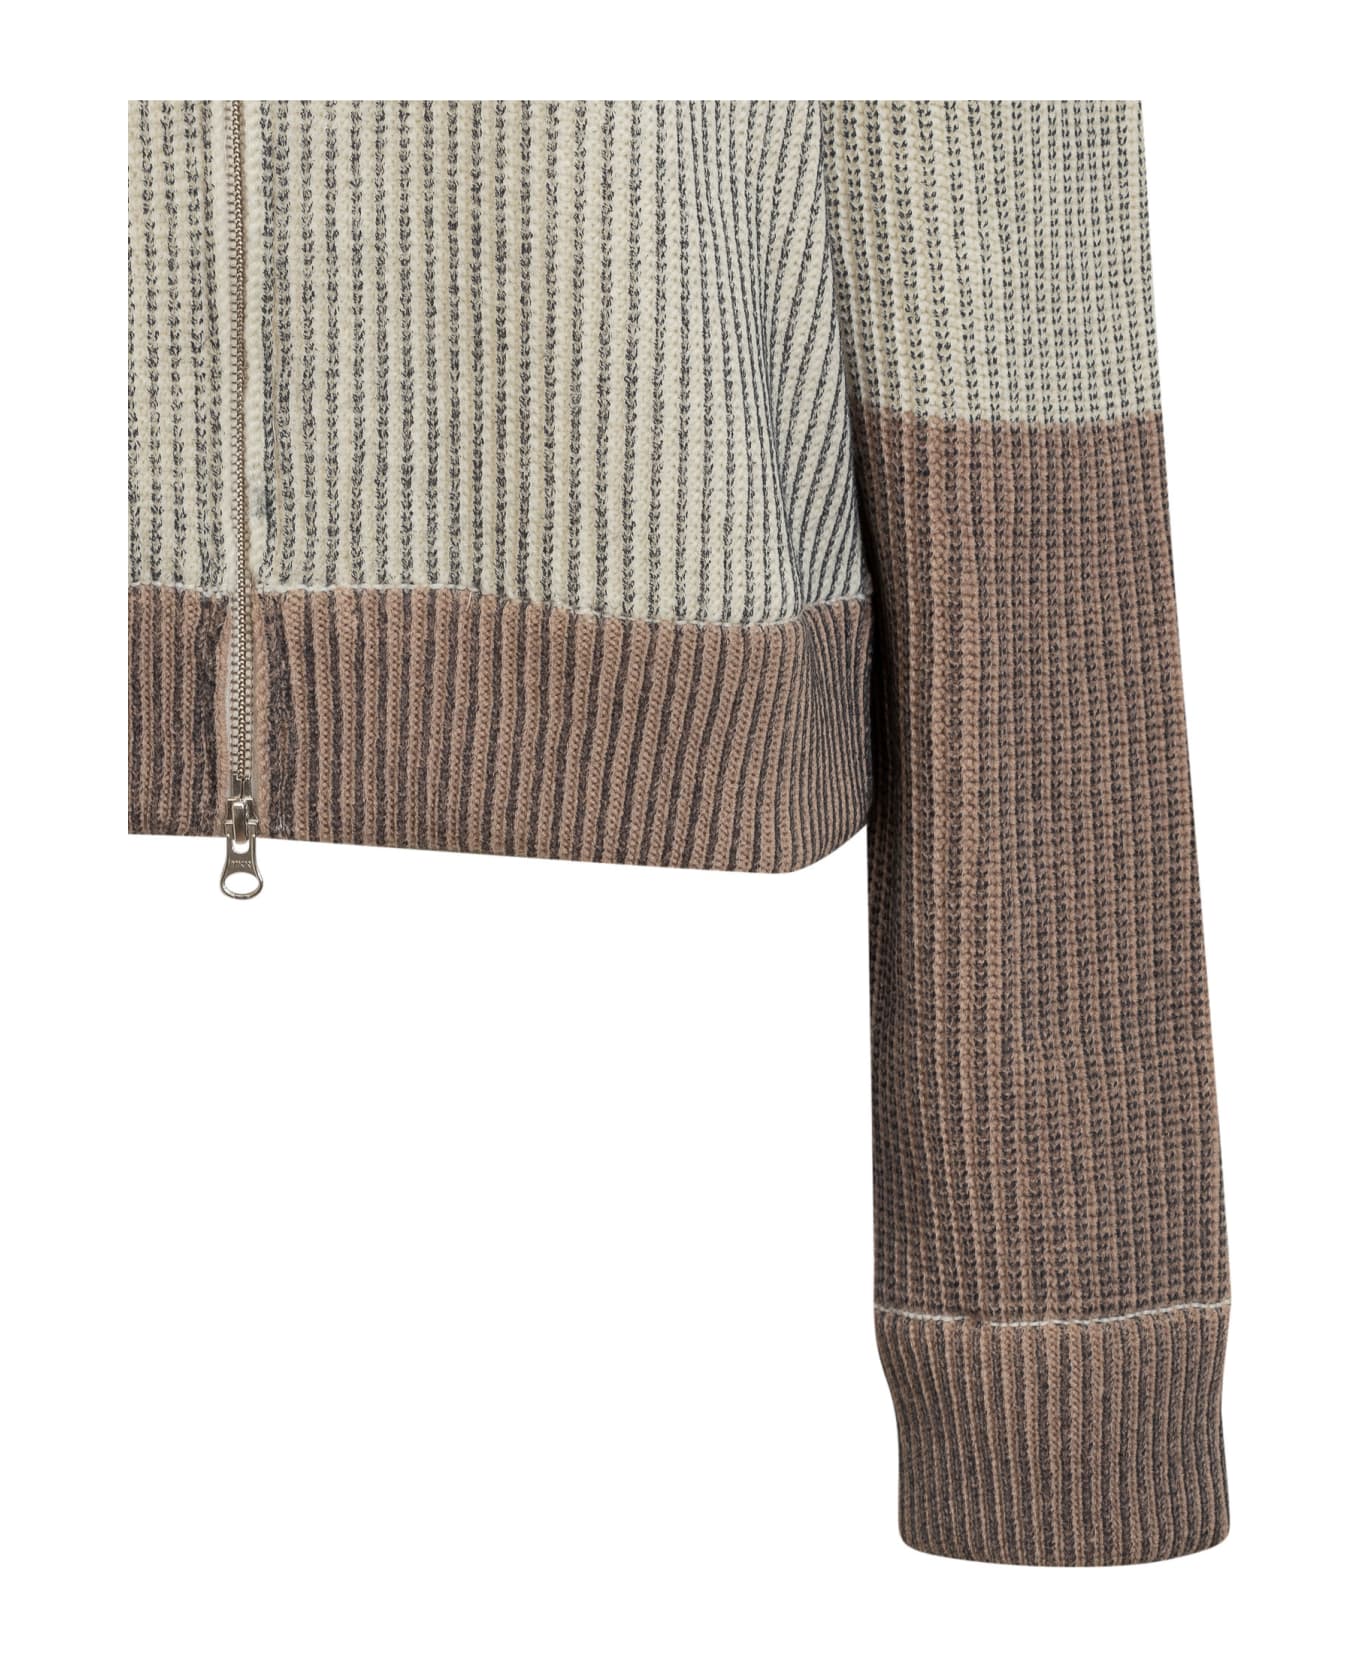 MM6 Maison Margiela Two-tone Wool Blend Turtleneck Sweater - FANTASIA